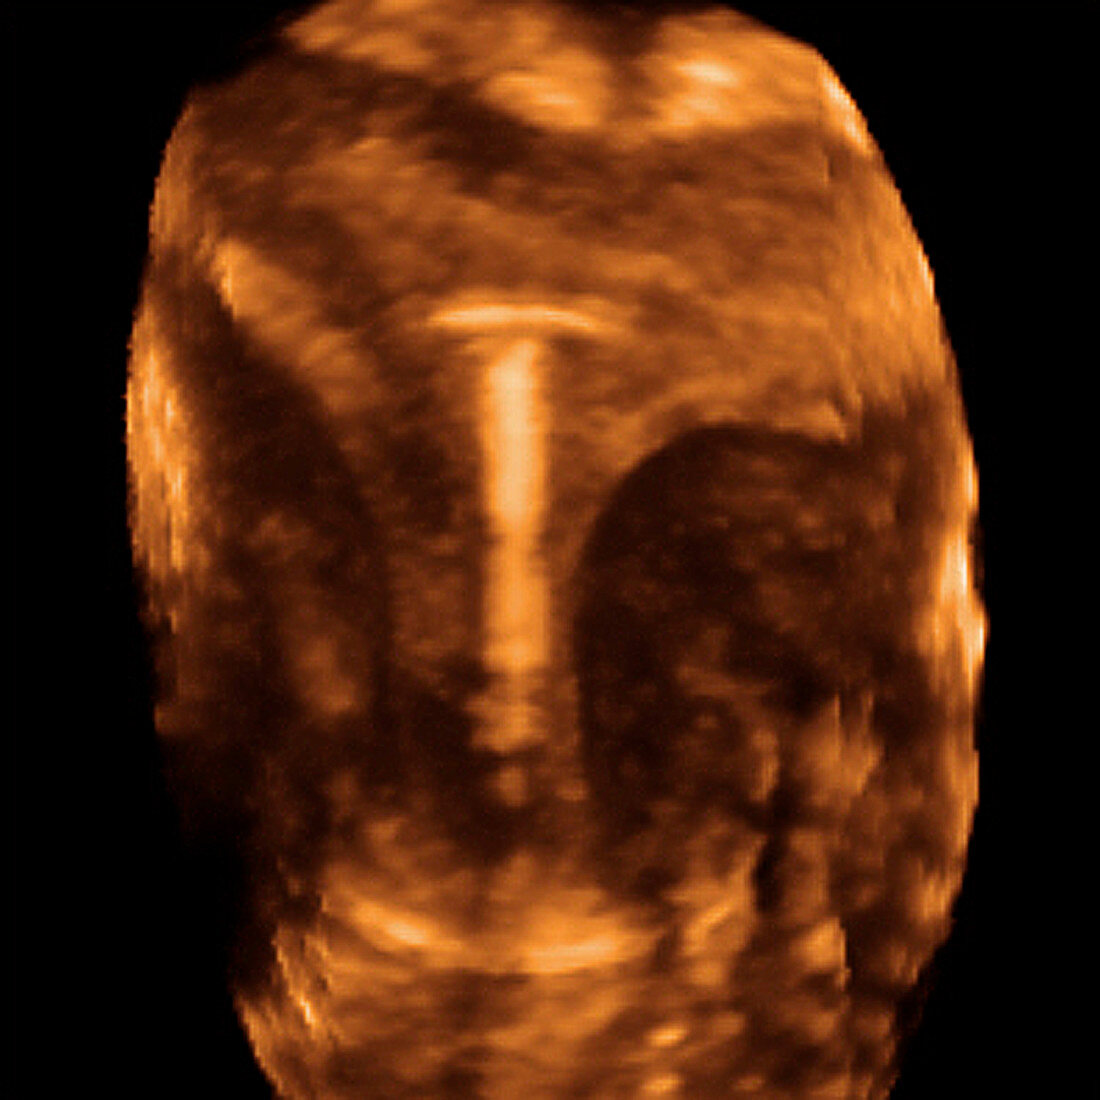 IUD contraceptive,ultrasound scan